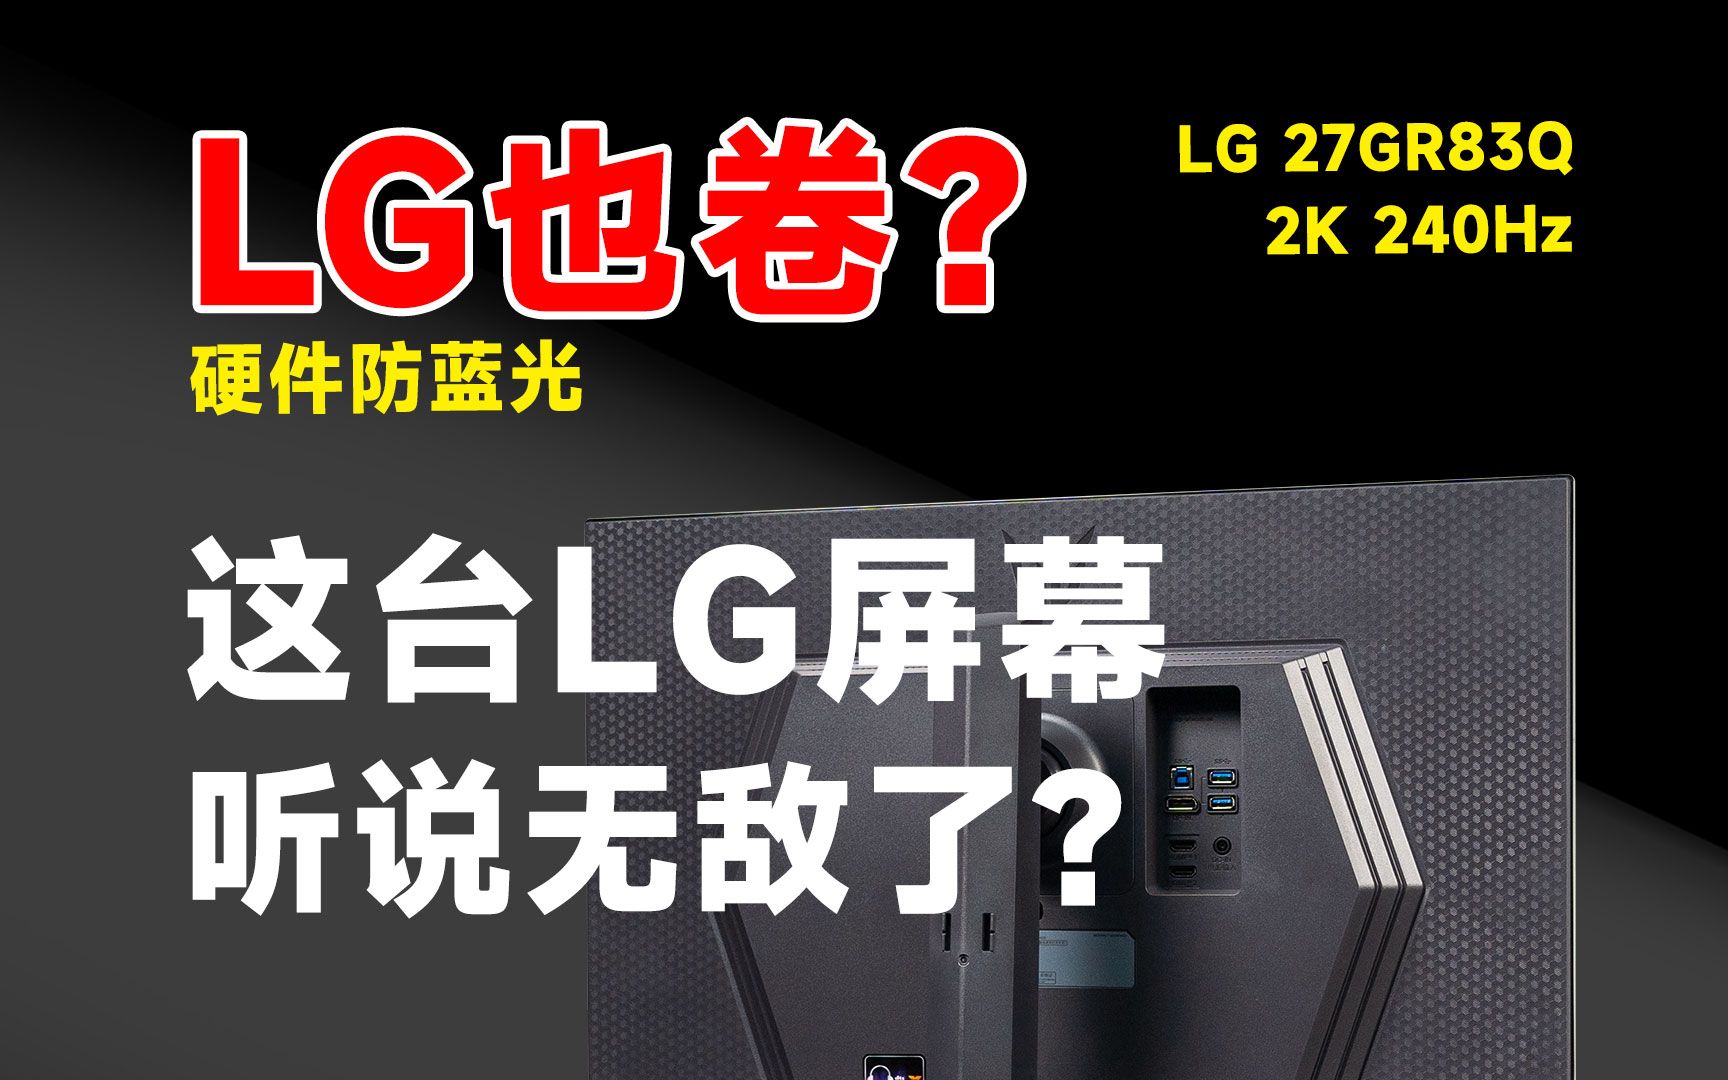 LG新品2K 240Hz电竞显示器！！它是一块优缺点都有占一点的屏幕，LG 27GR83Q猫腻所在